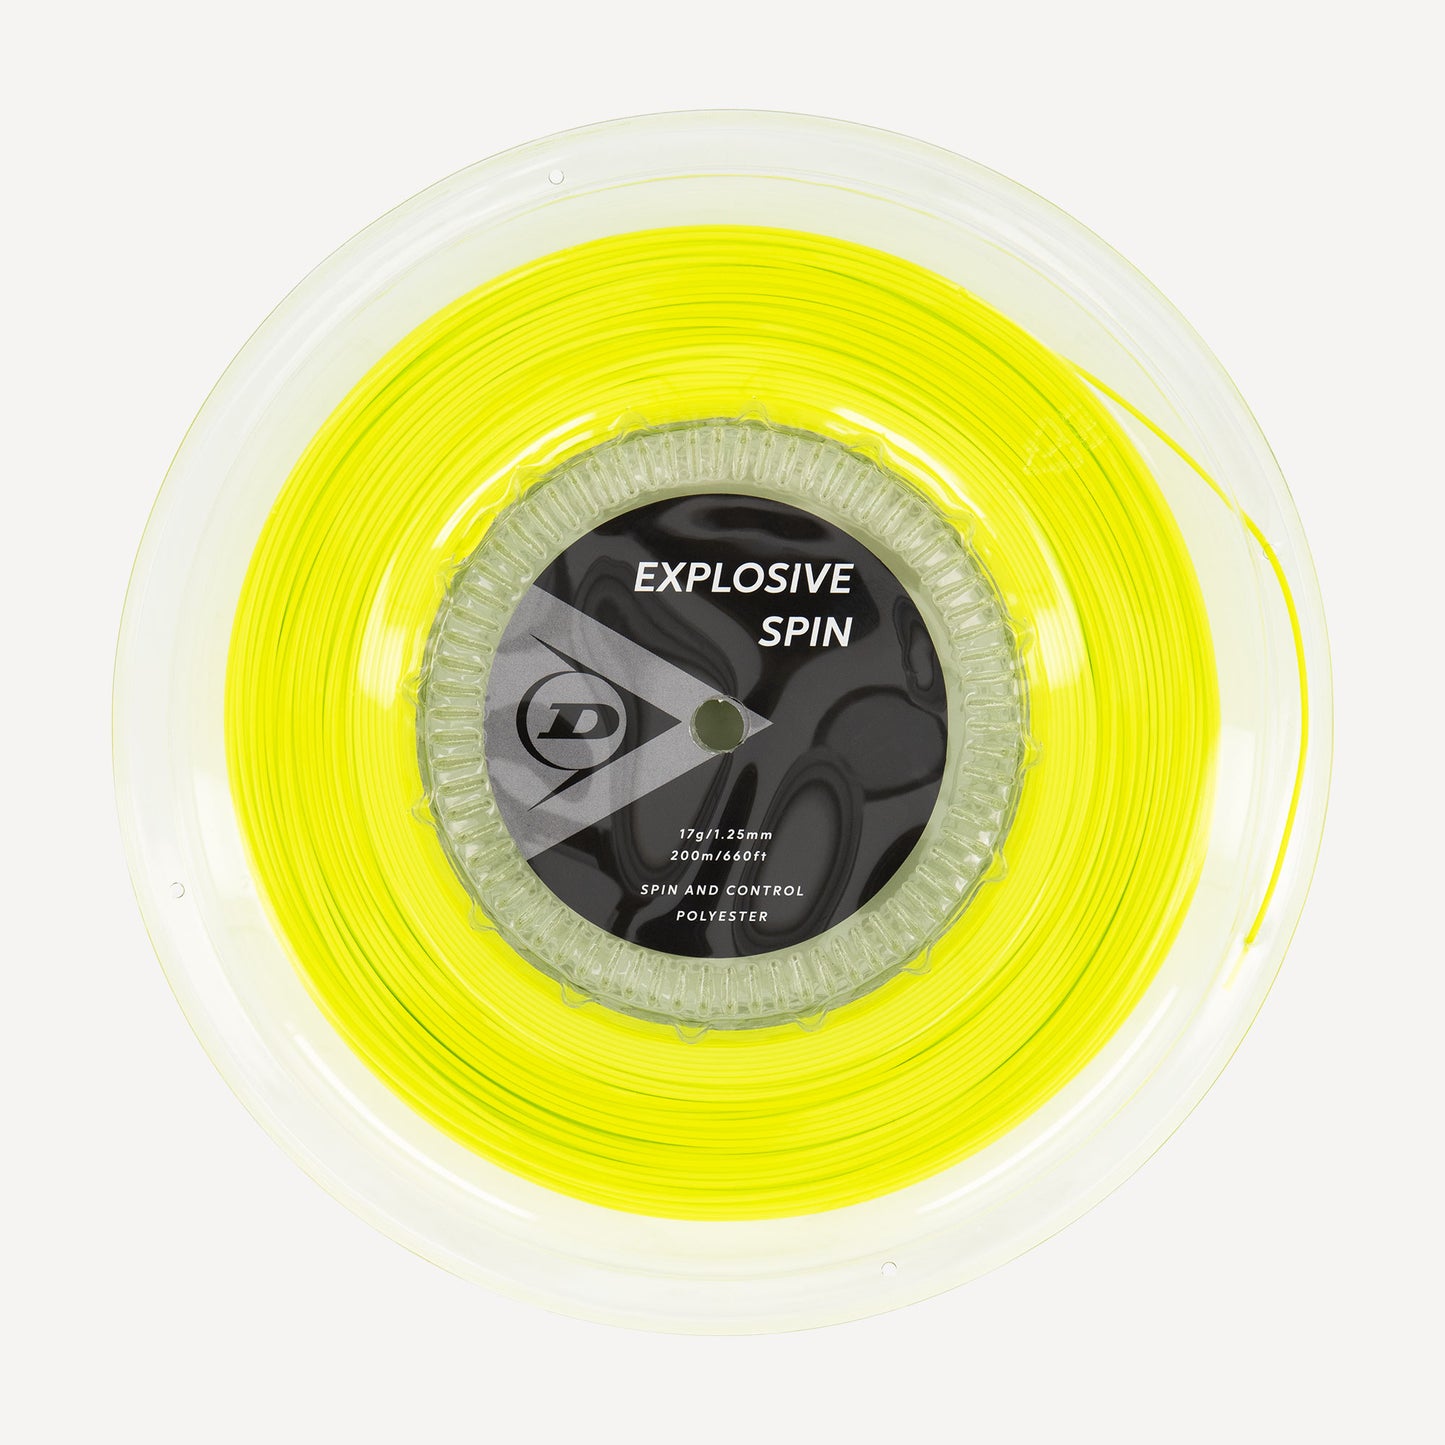 Dunlop Explosive Spin Tennis String 200m Yellow